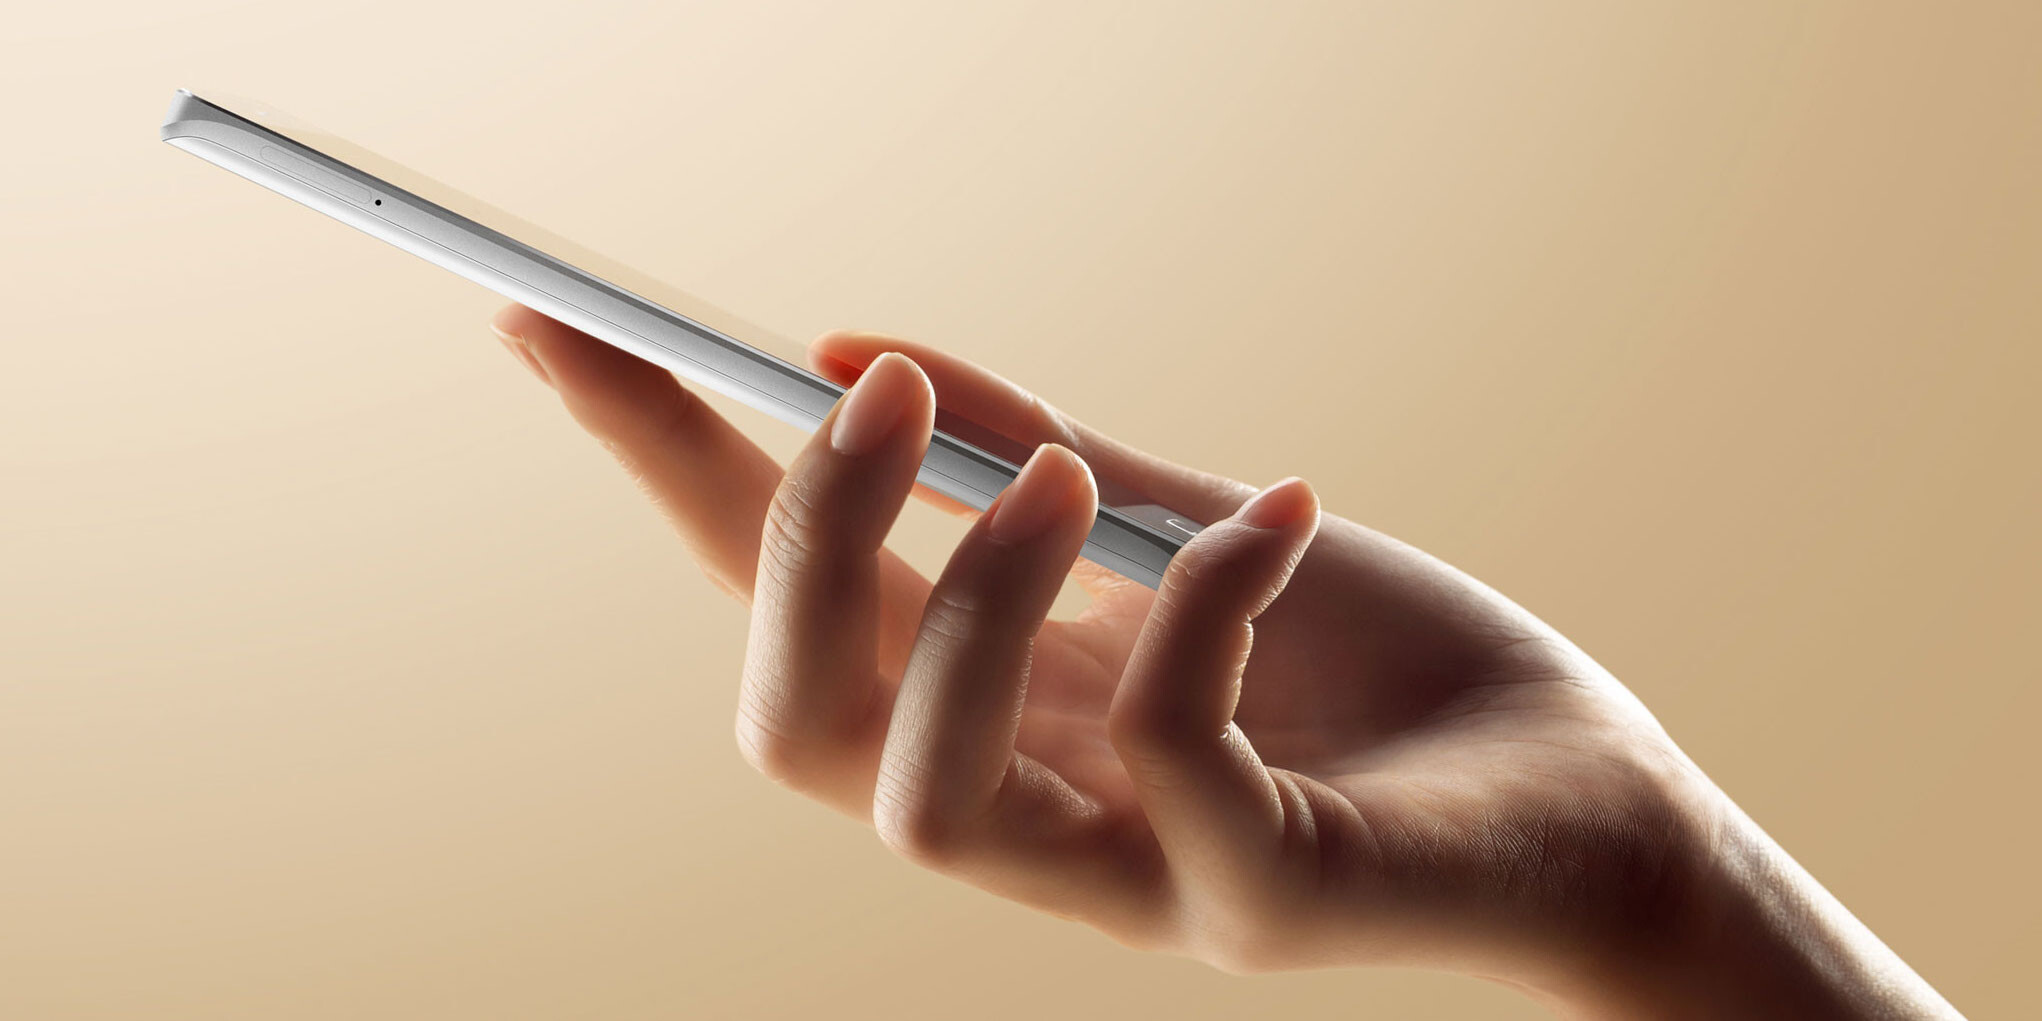 xiaomi-mi-6-smartphone-news-specs-release-date